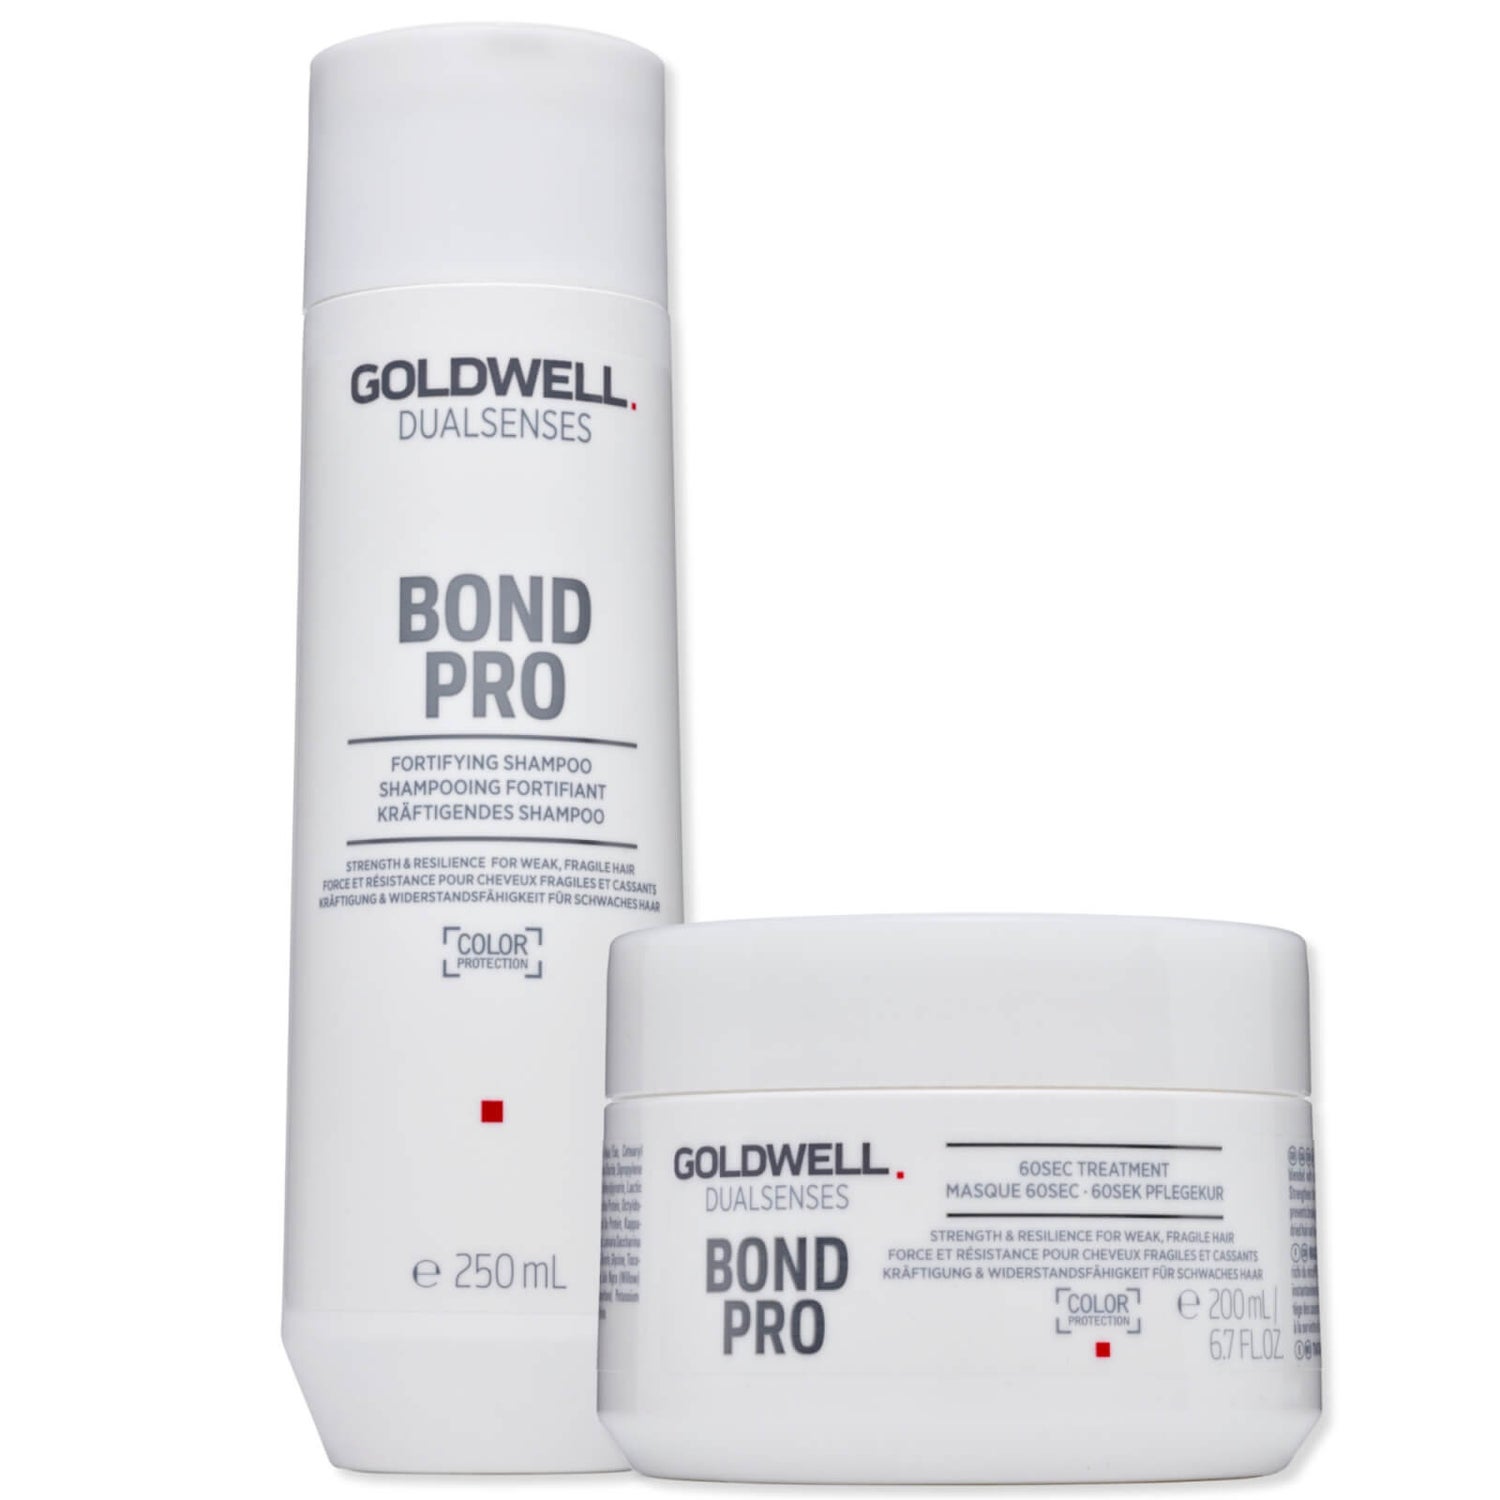 Goldwell Dualsenses Bond Pro Shampoo and Mask Duo For Weak, Damaged Hair (Worth £32.35)